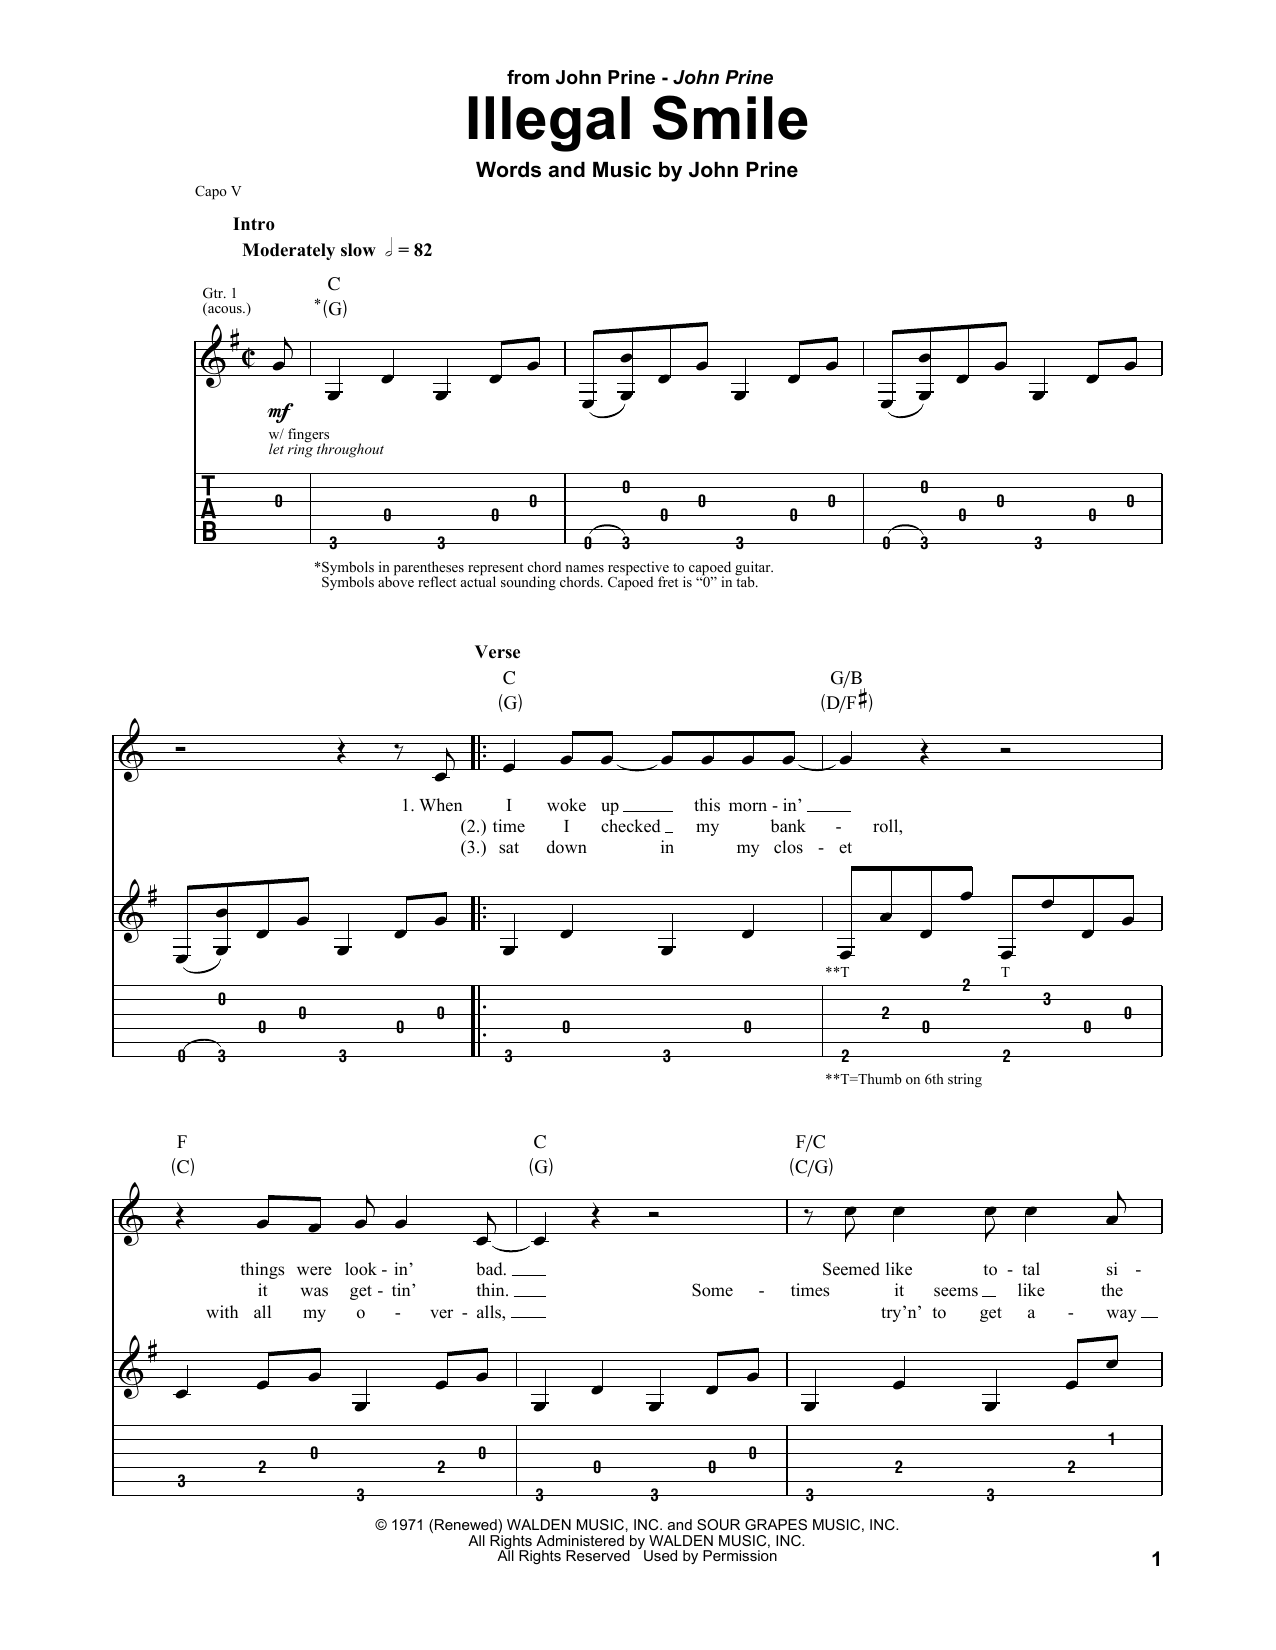 John Prine Illegal Smile Sheet Music Notes & Chords for Guitar Tab Play-Along - Download or Print PDF